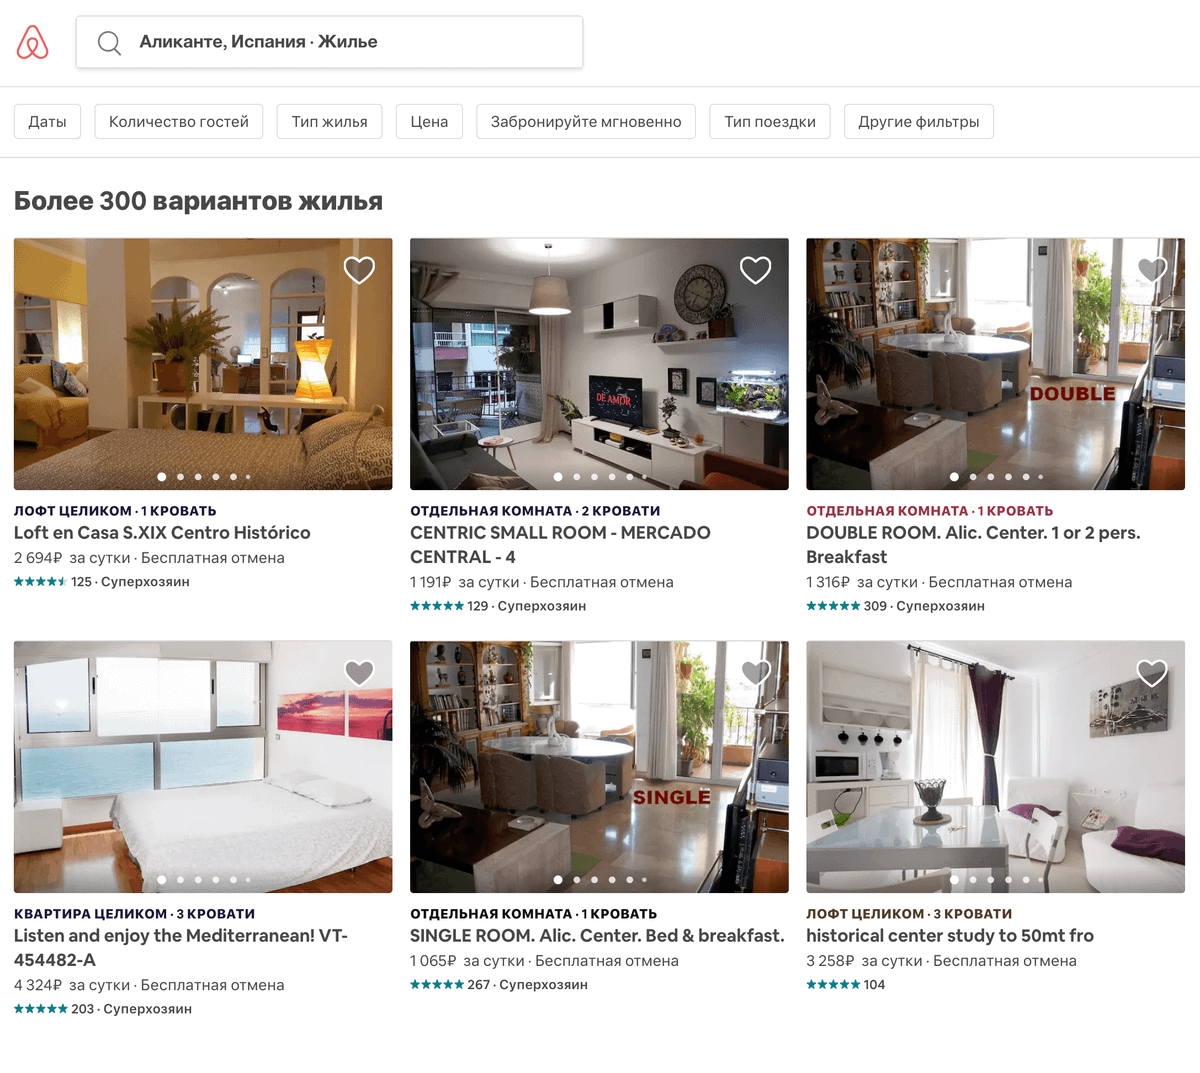 На Airbnb сотни предложений аренды жилья на побережье